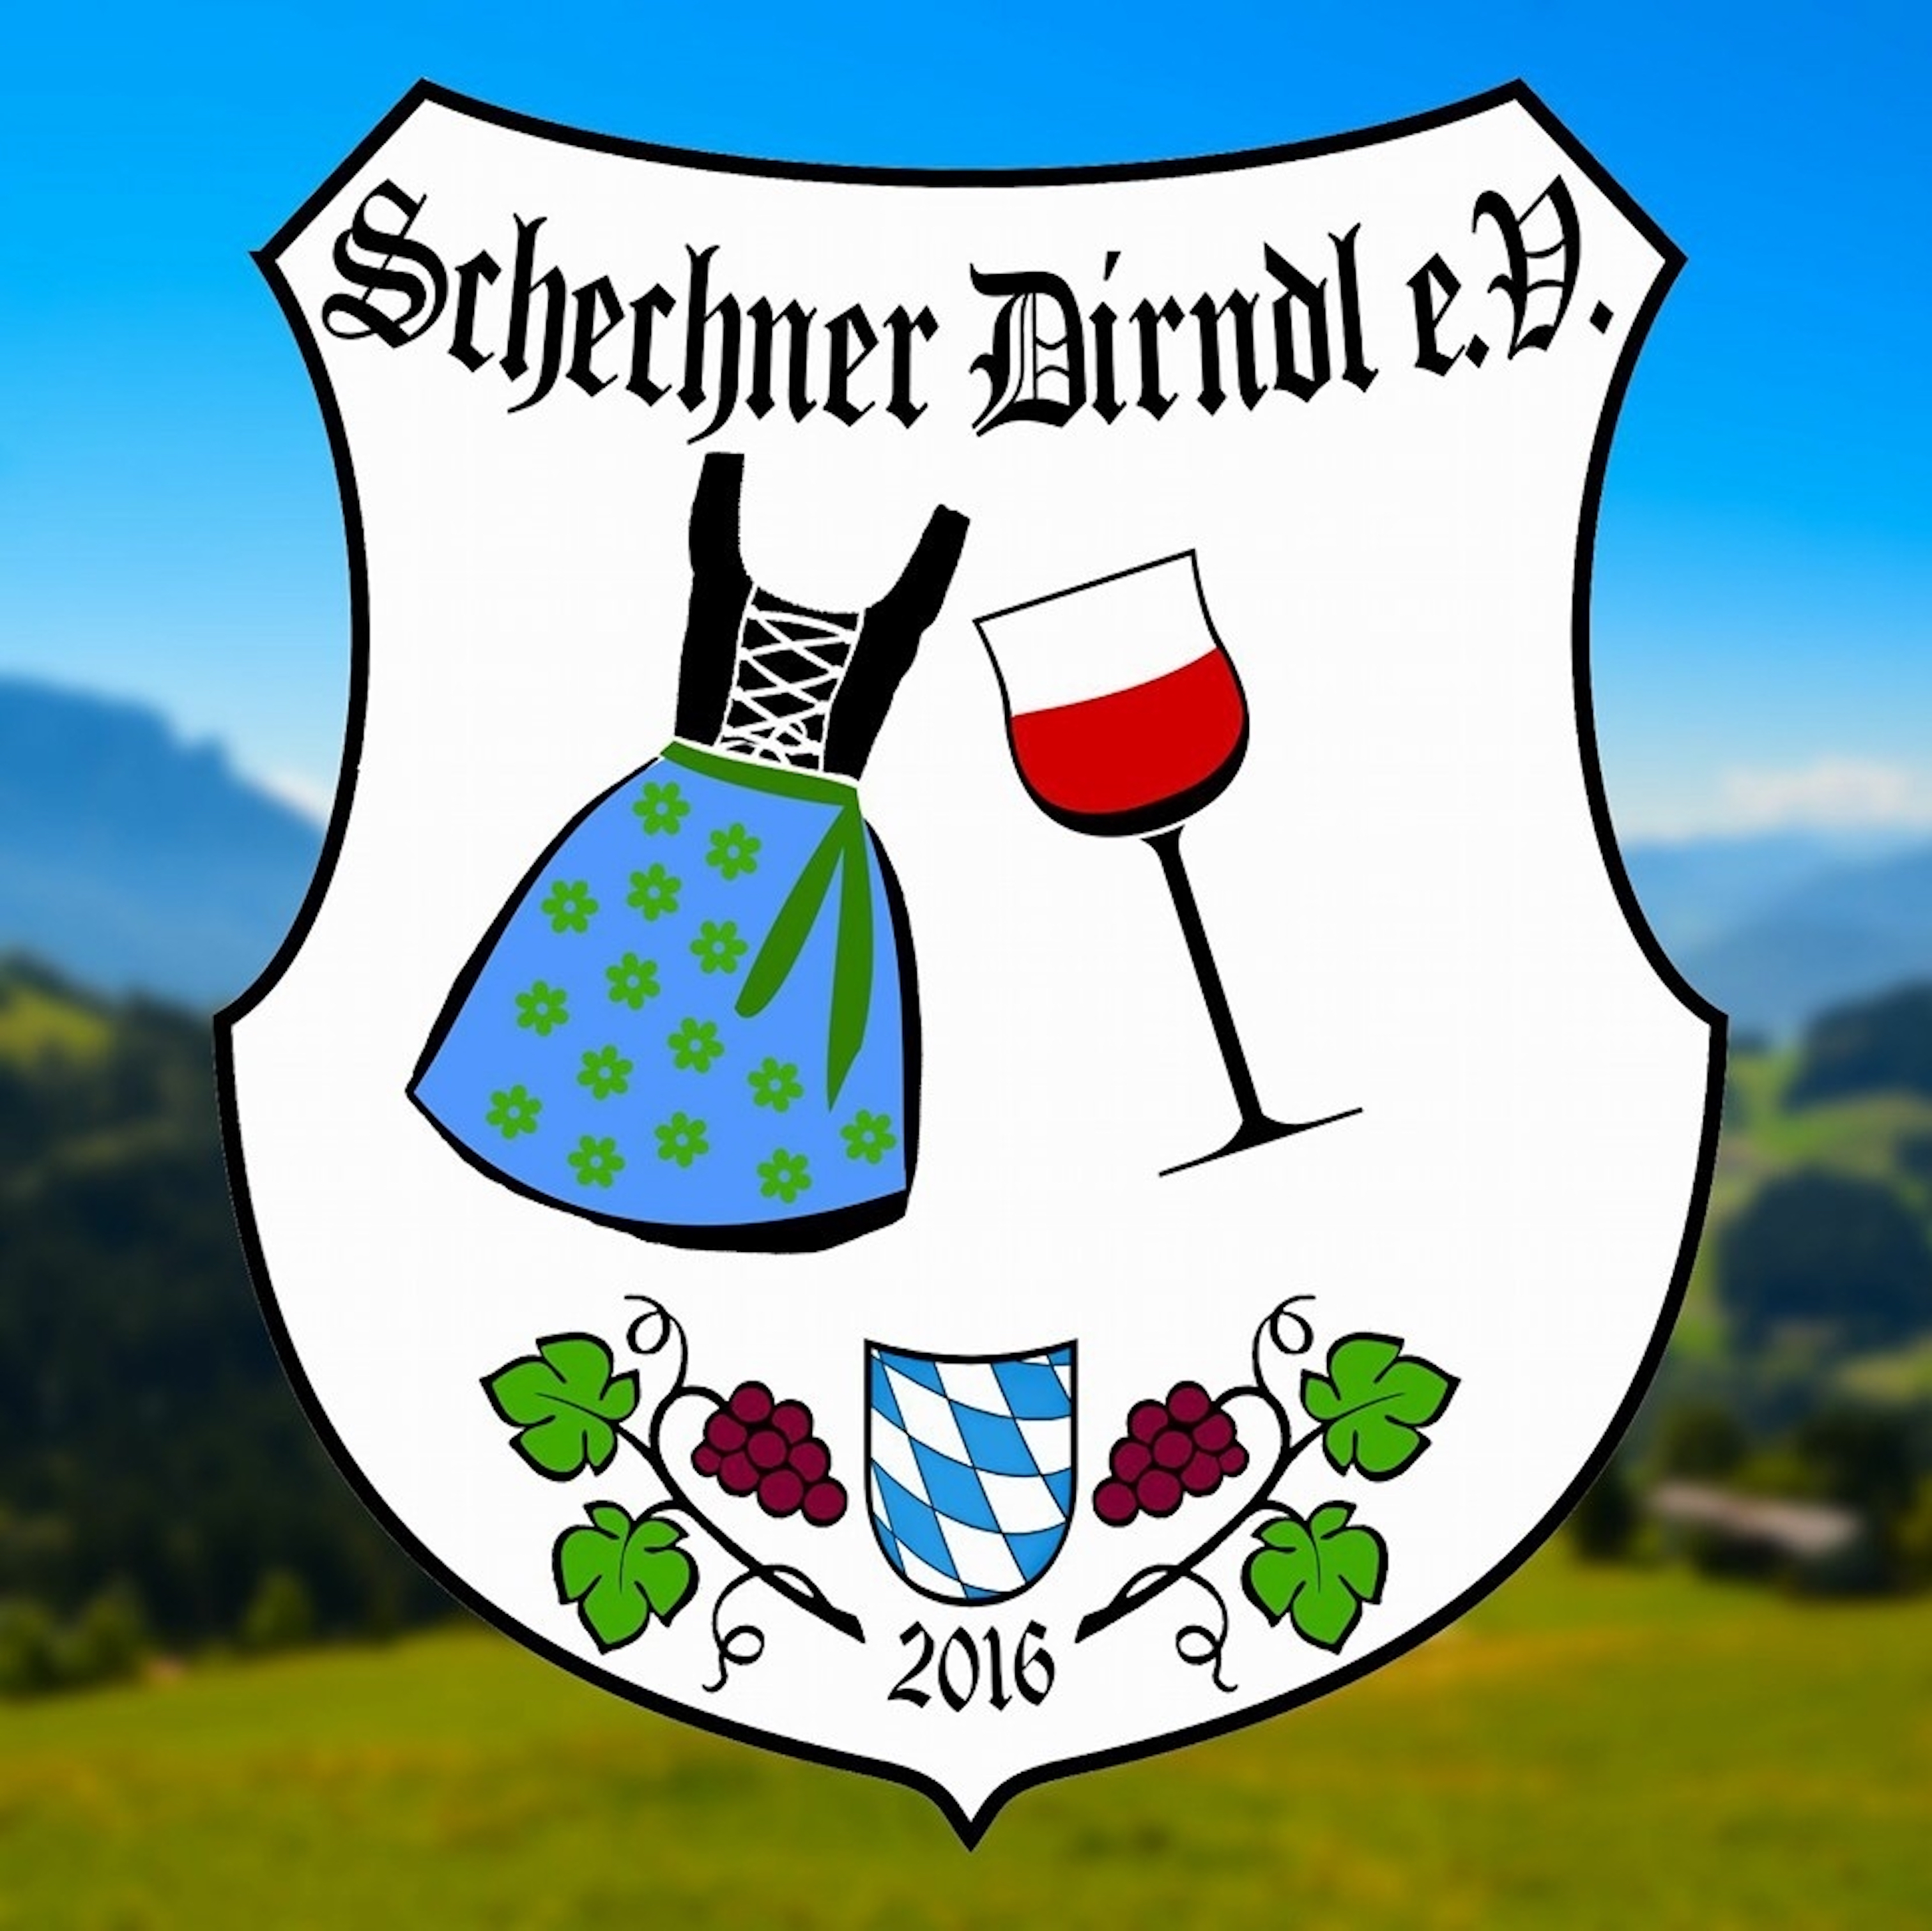 Schechner Dirndl e.V